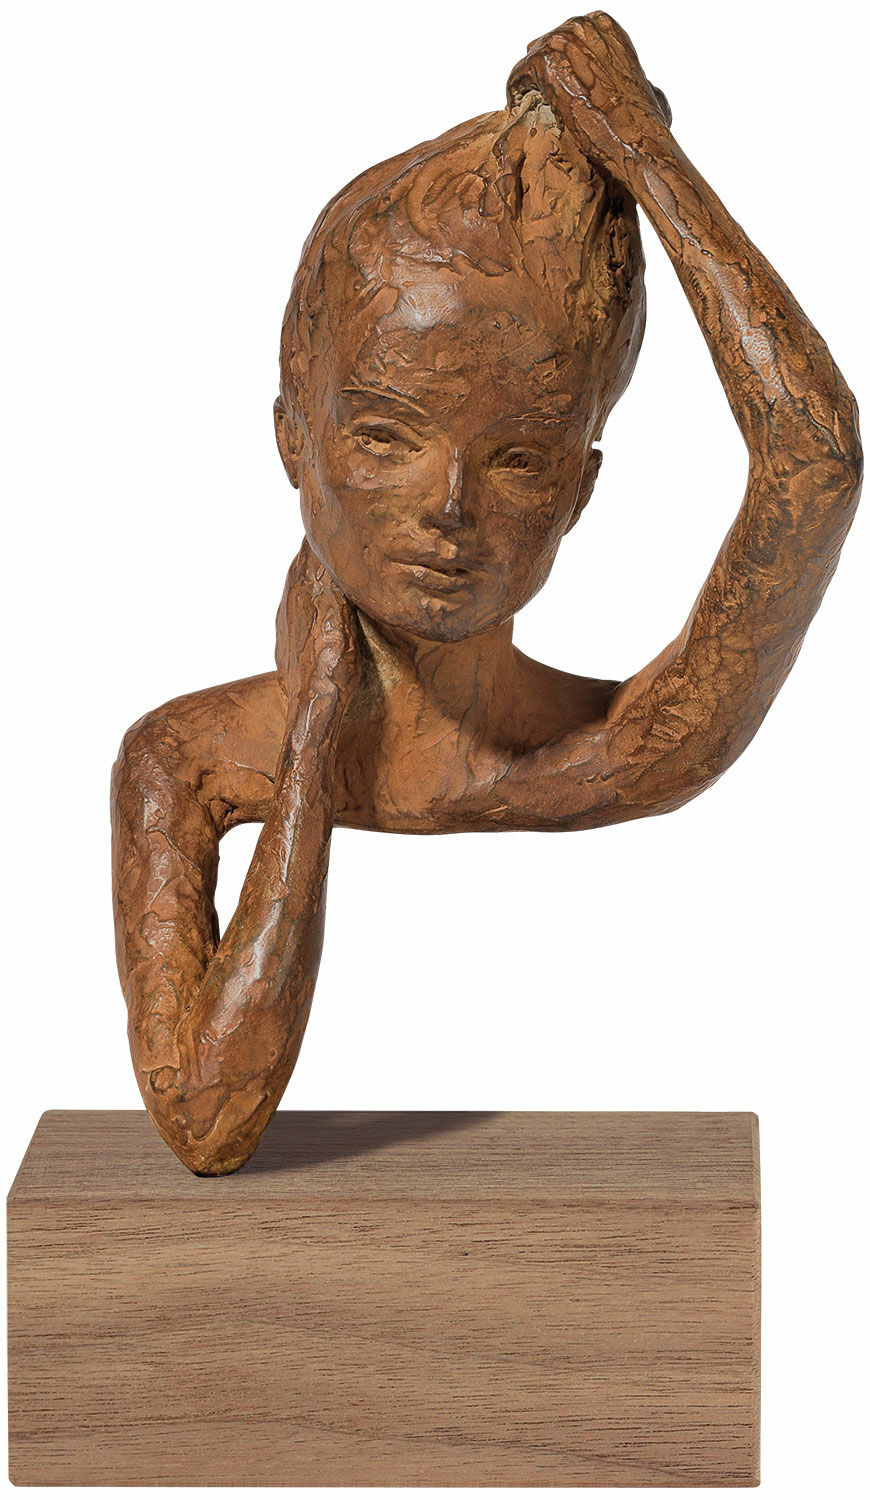 Sculpture "Energy", bronze by Valerie Otte